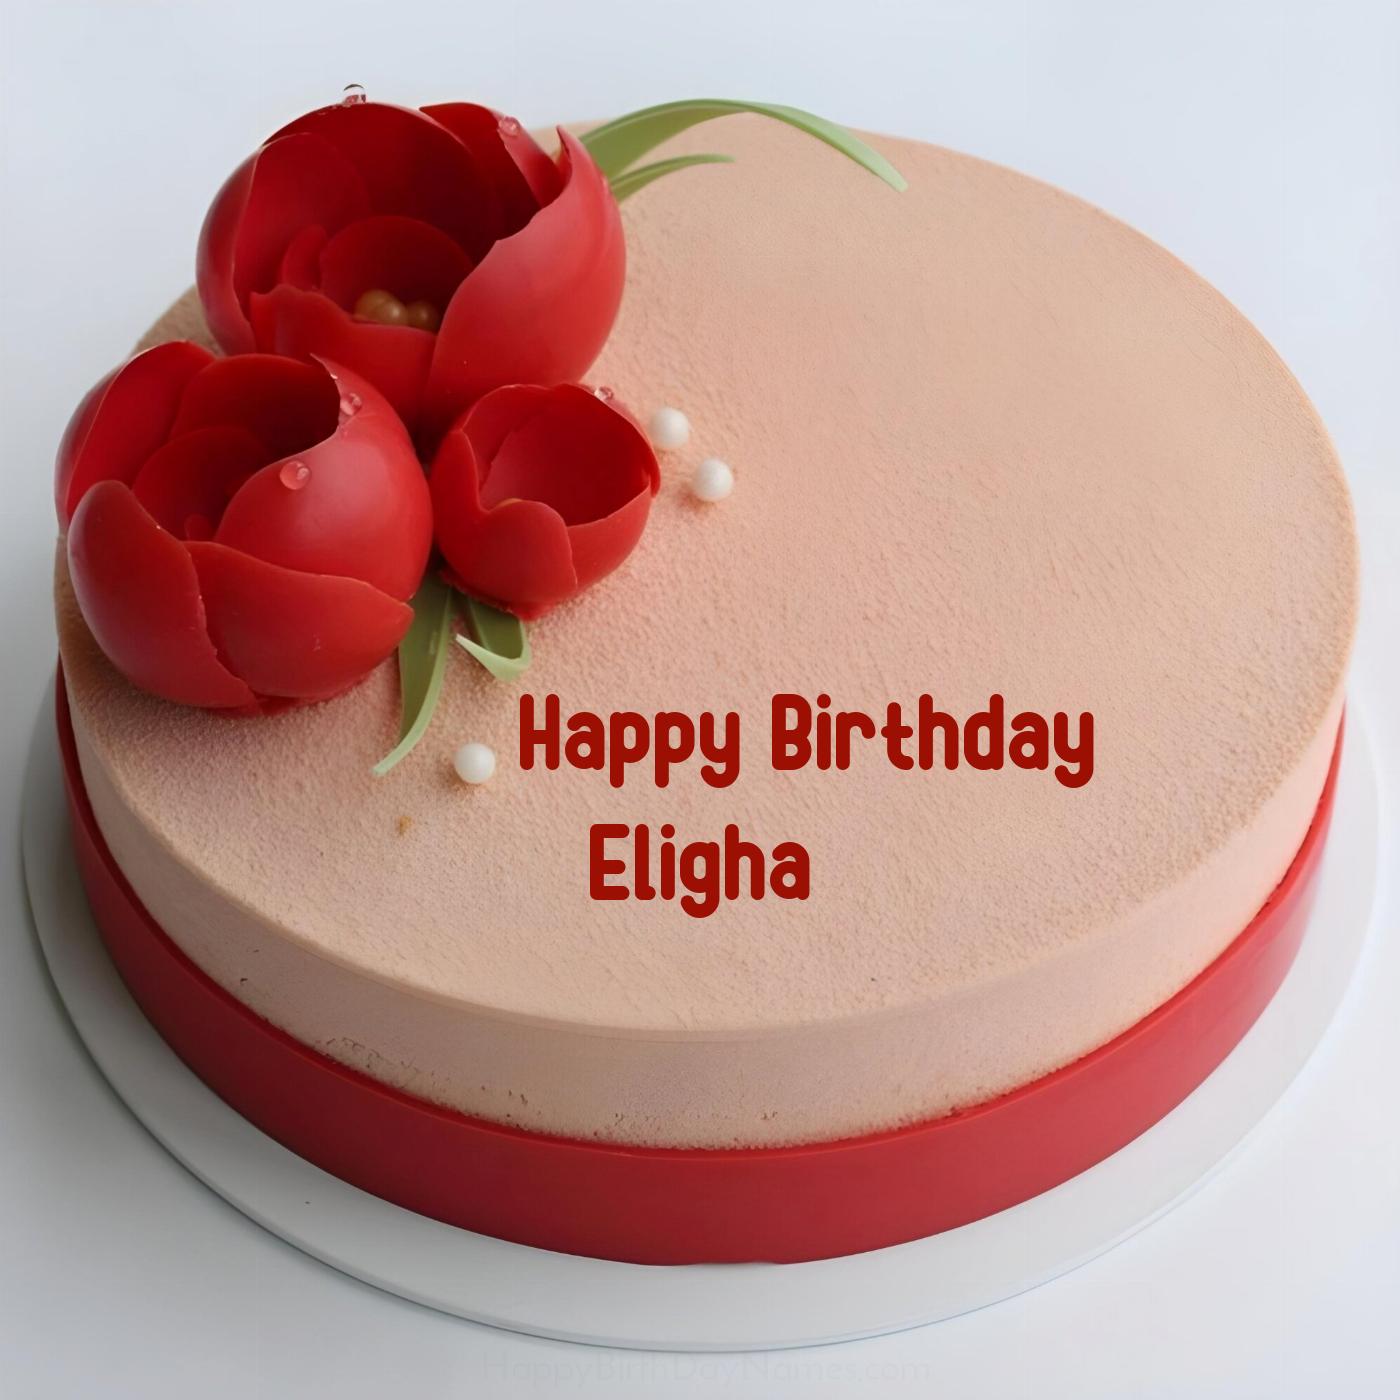 Happy Birthday Eligha Velvet Flowers Cake